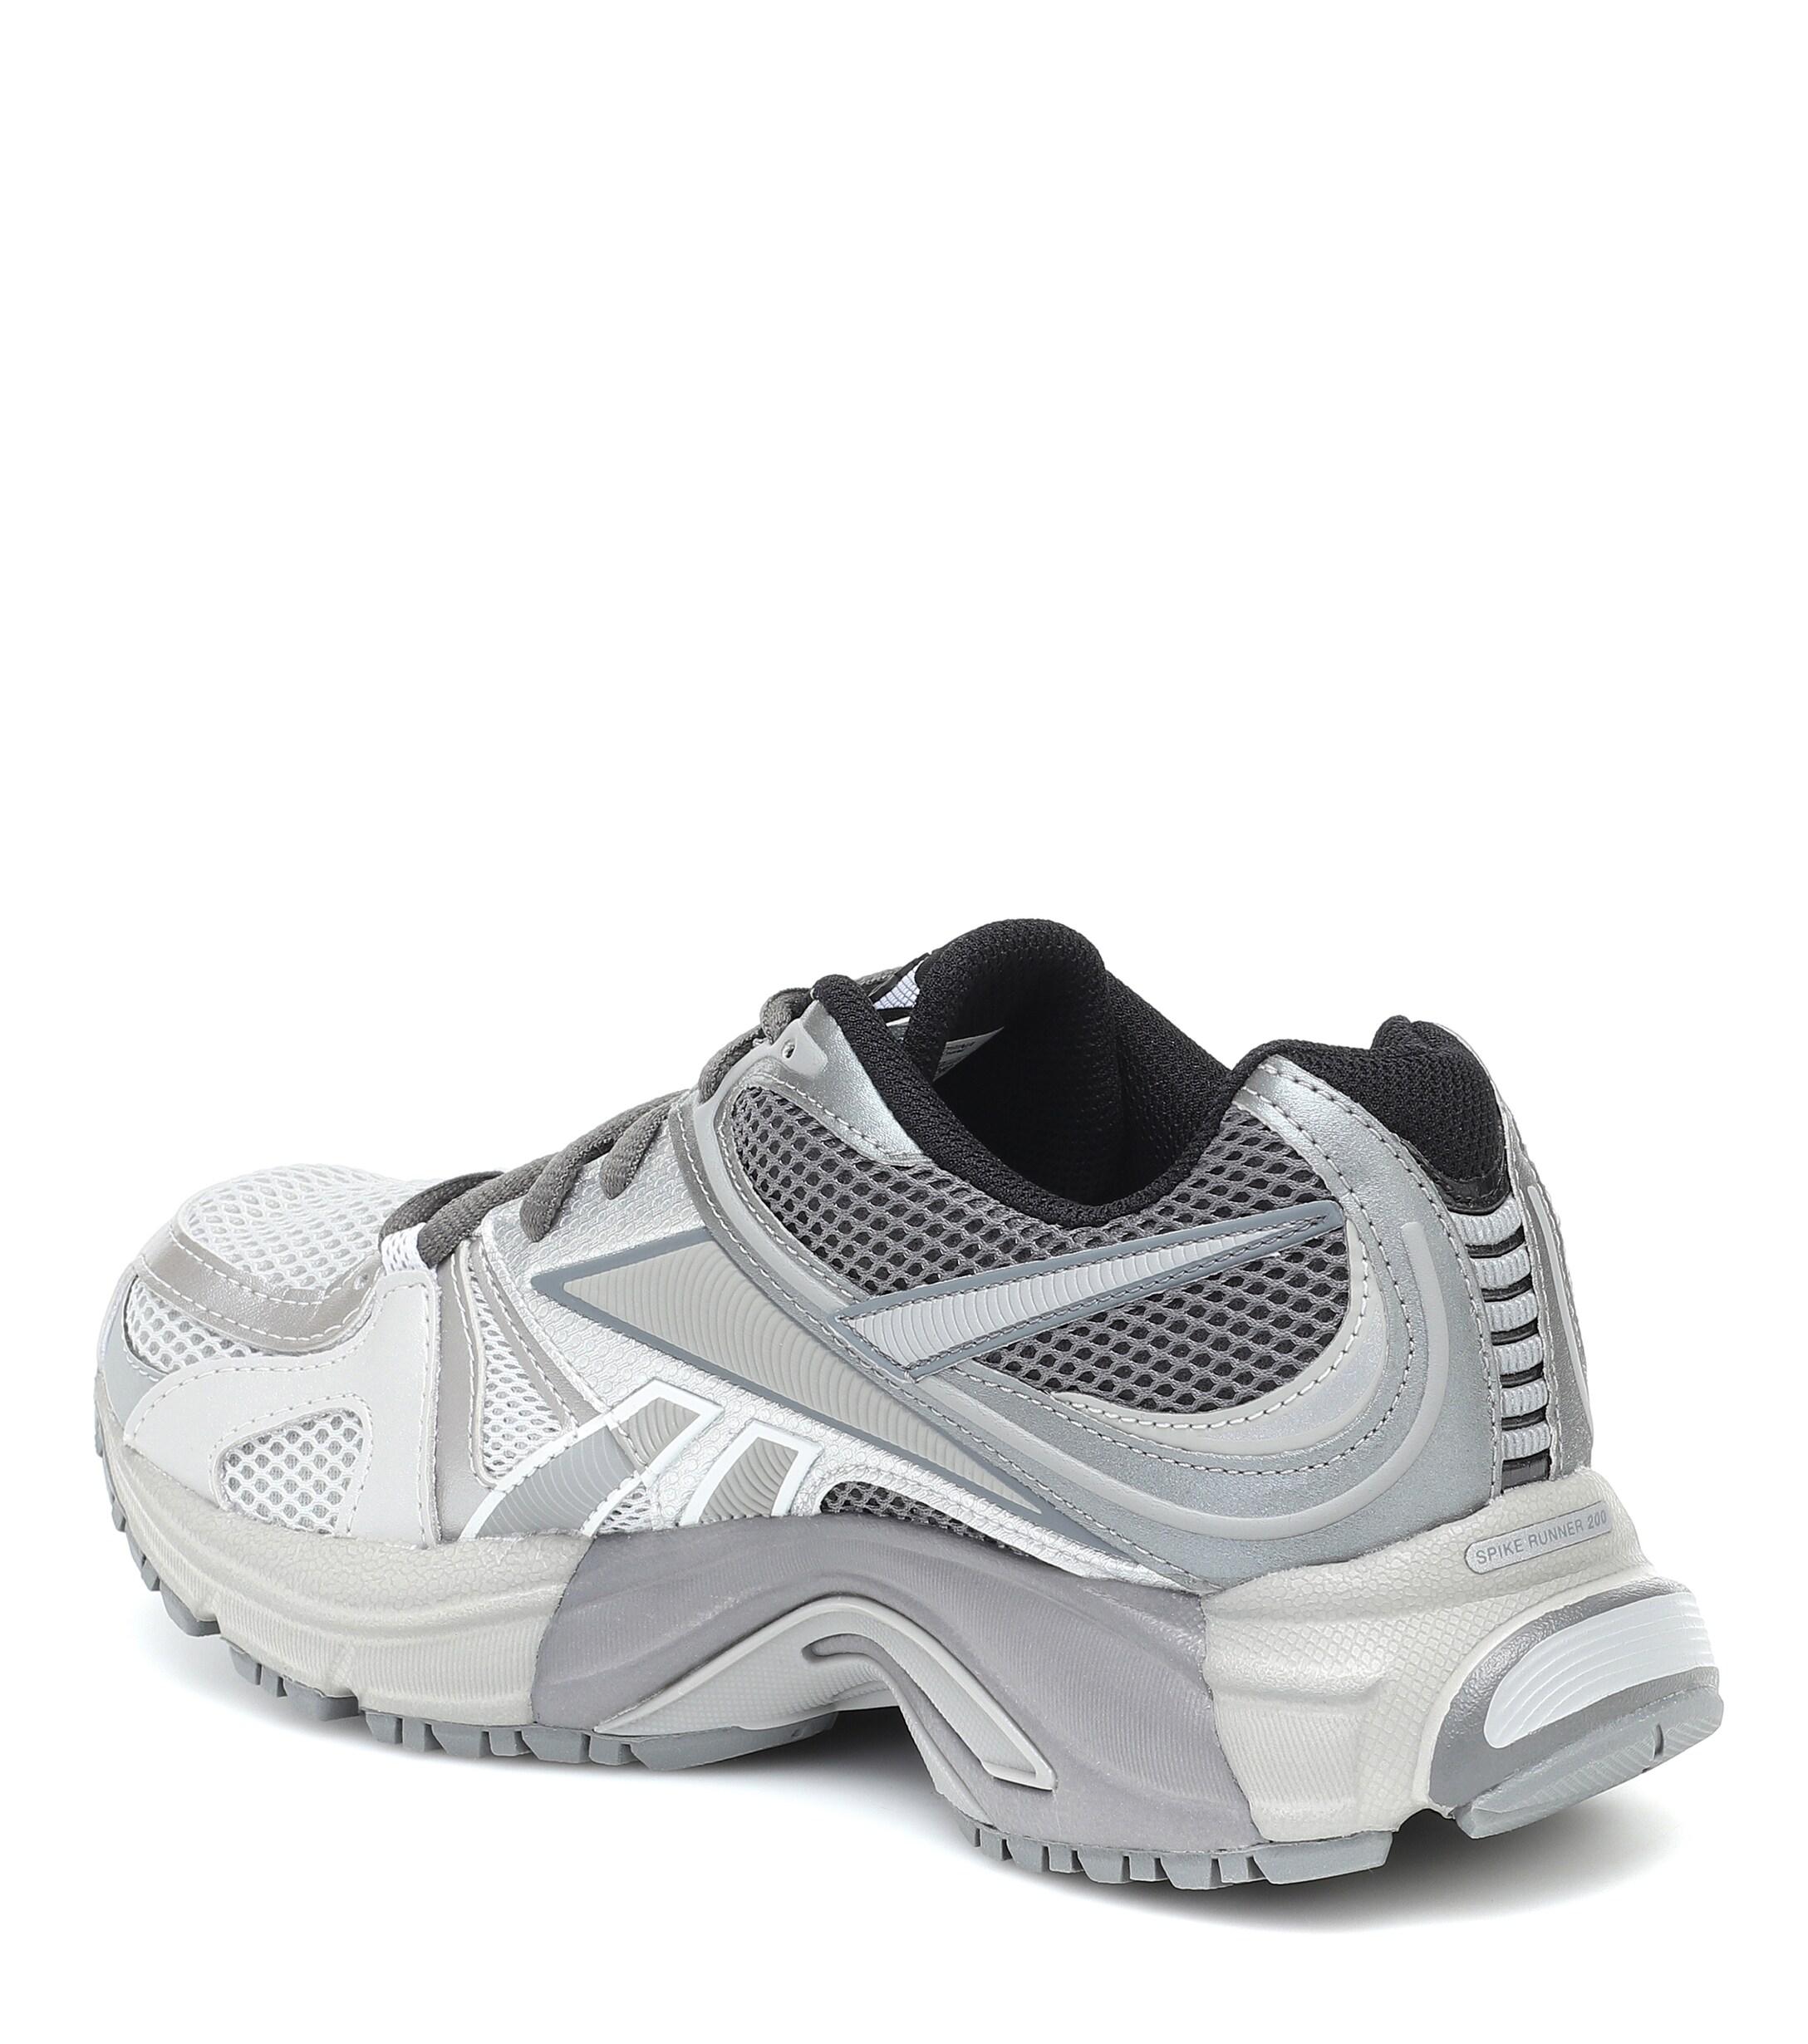 Vetements X Reebok Spike Runner 200 Sneakers in Gray | Lyst